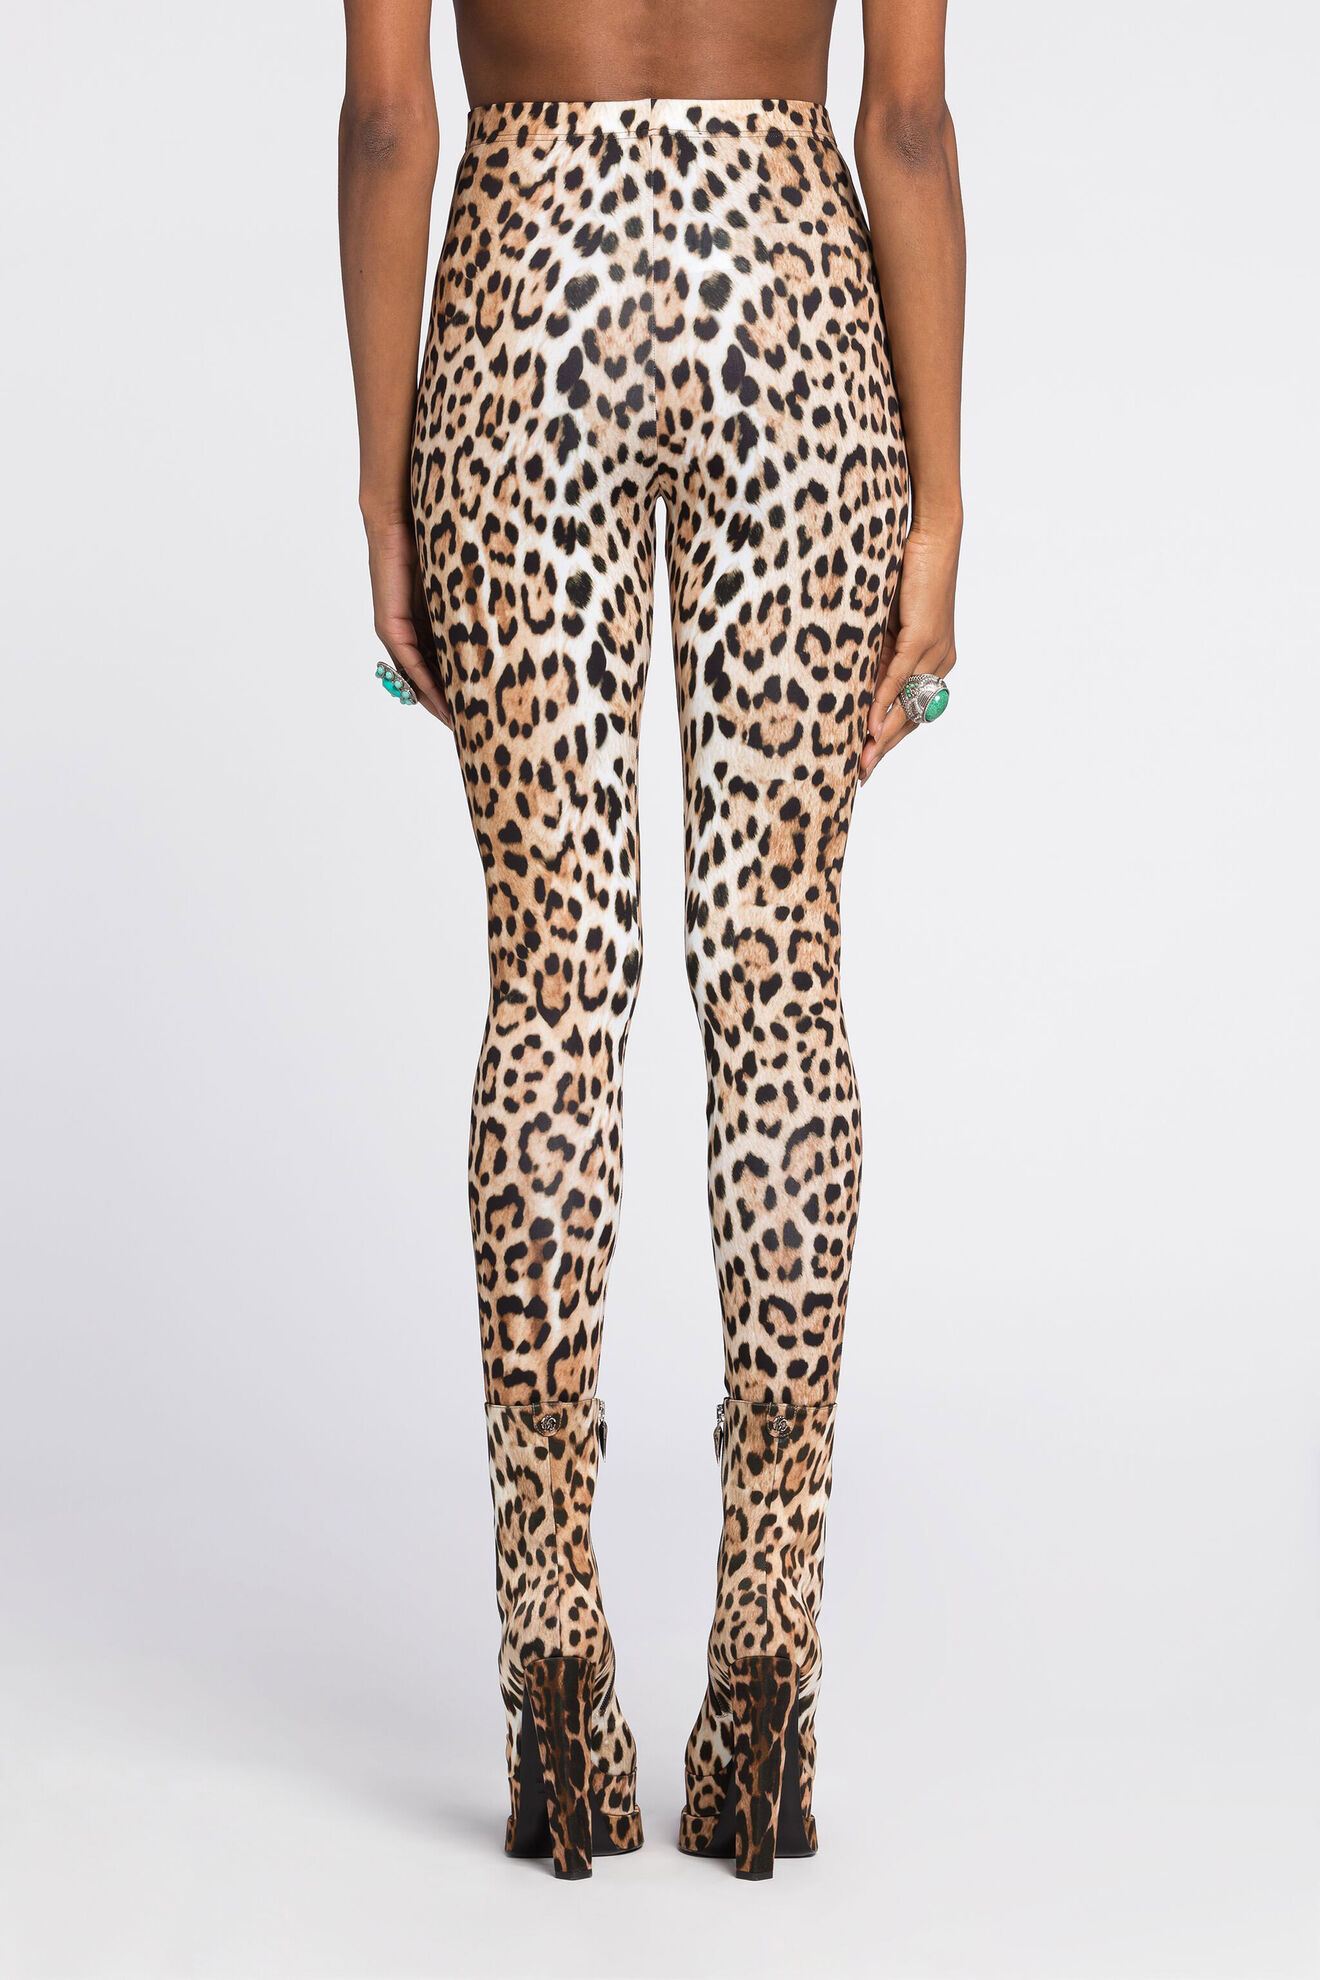 ZLJUS Women Leopard Print Leggings No Transparent High Knee